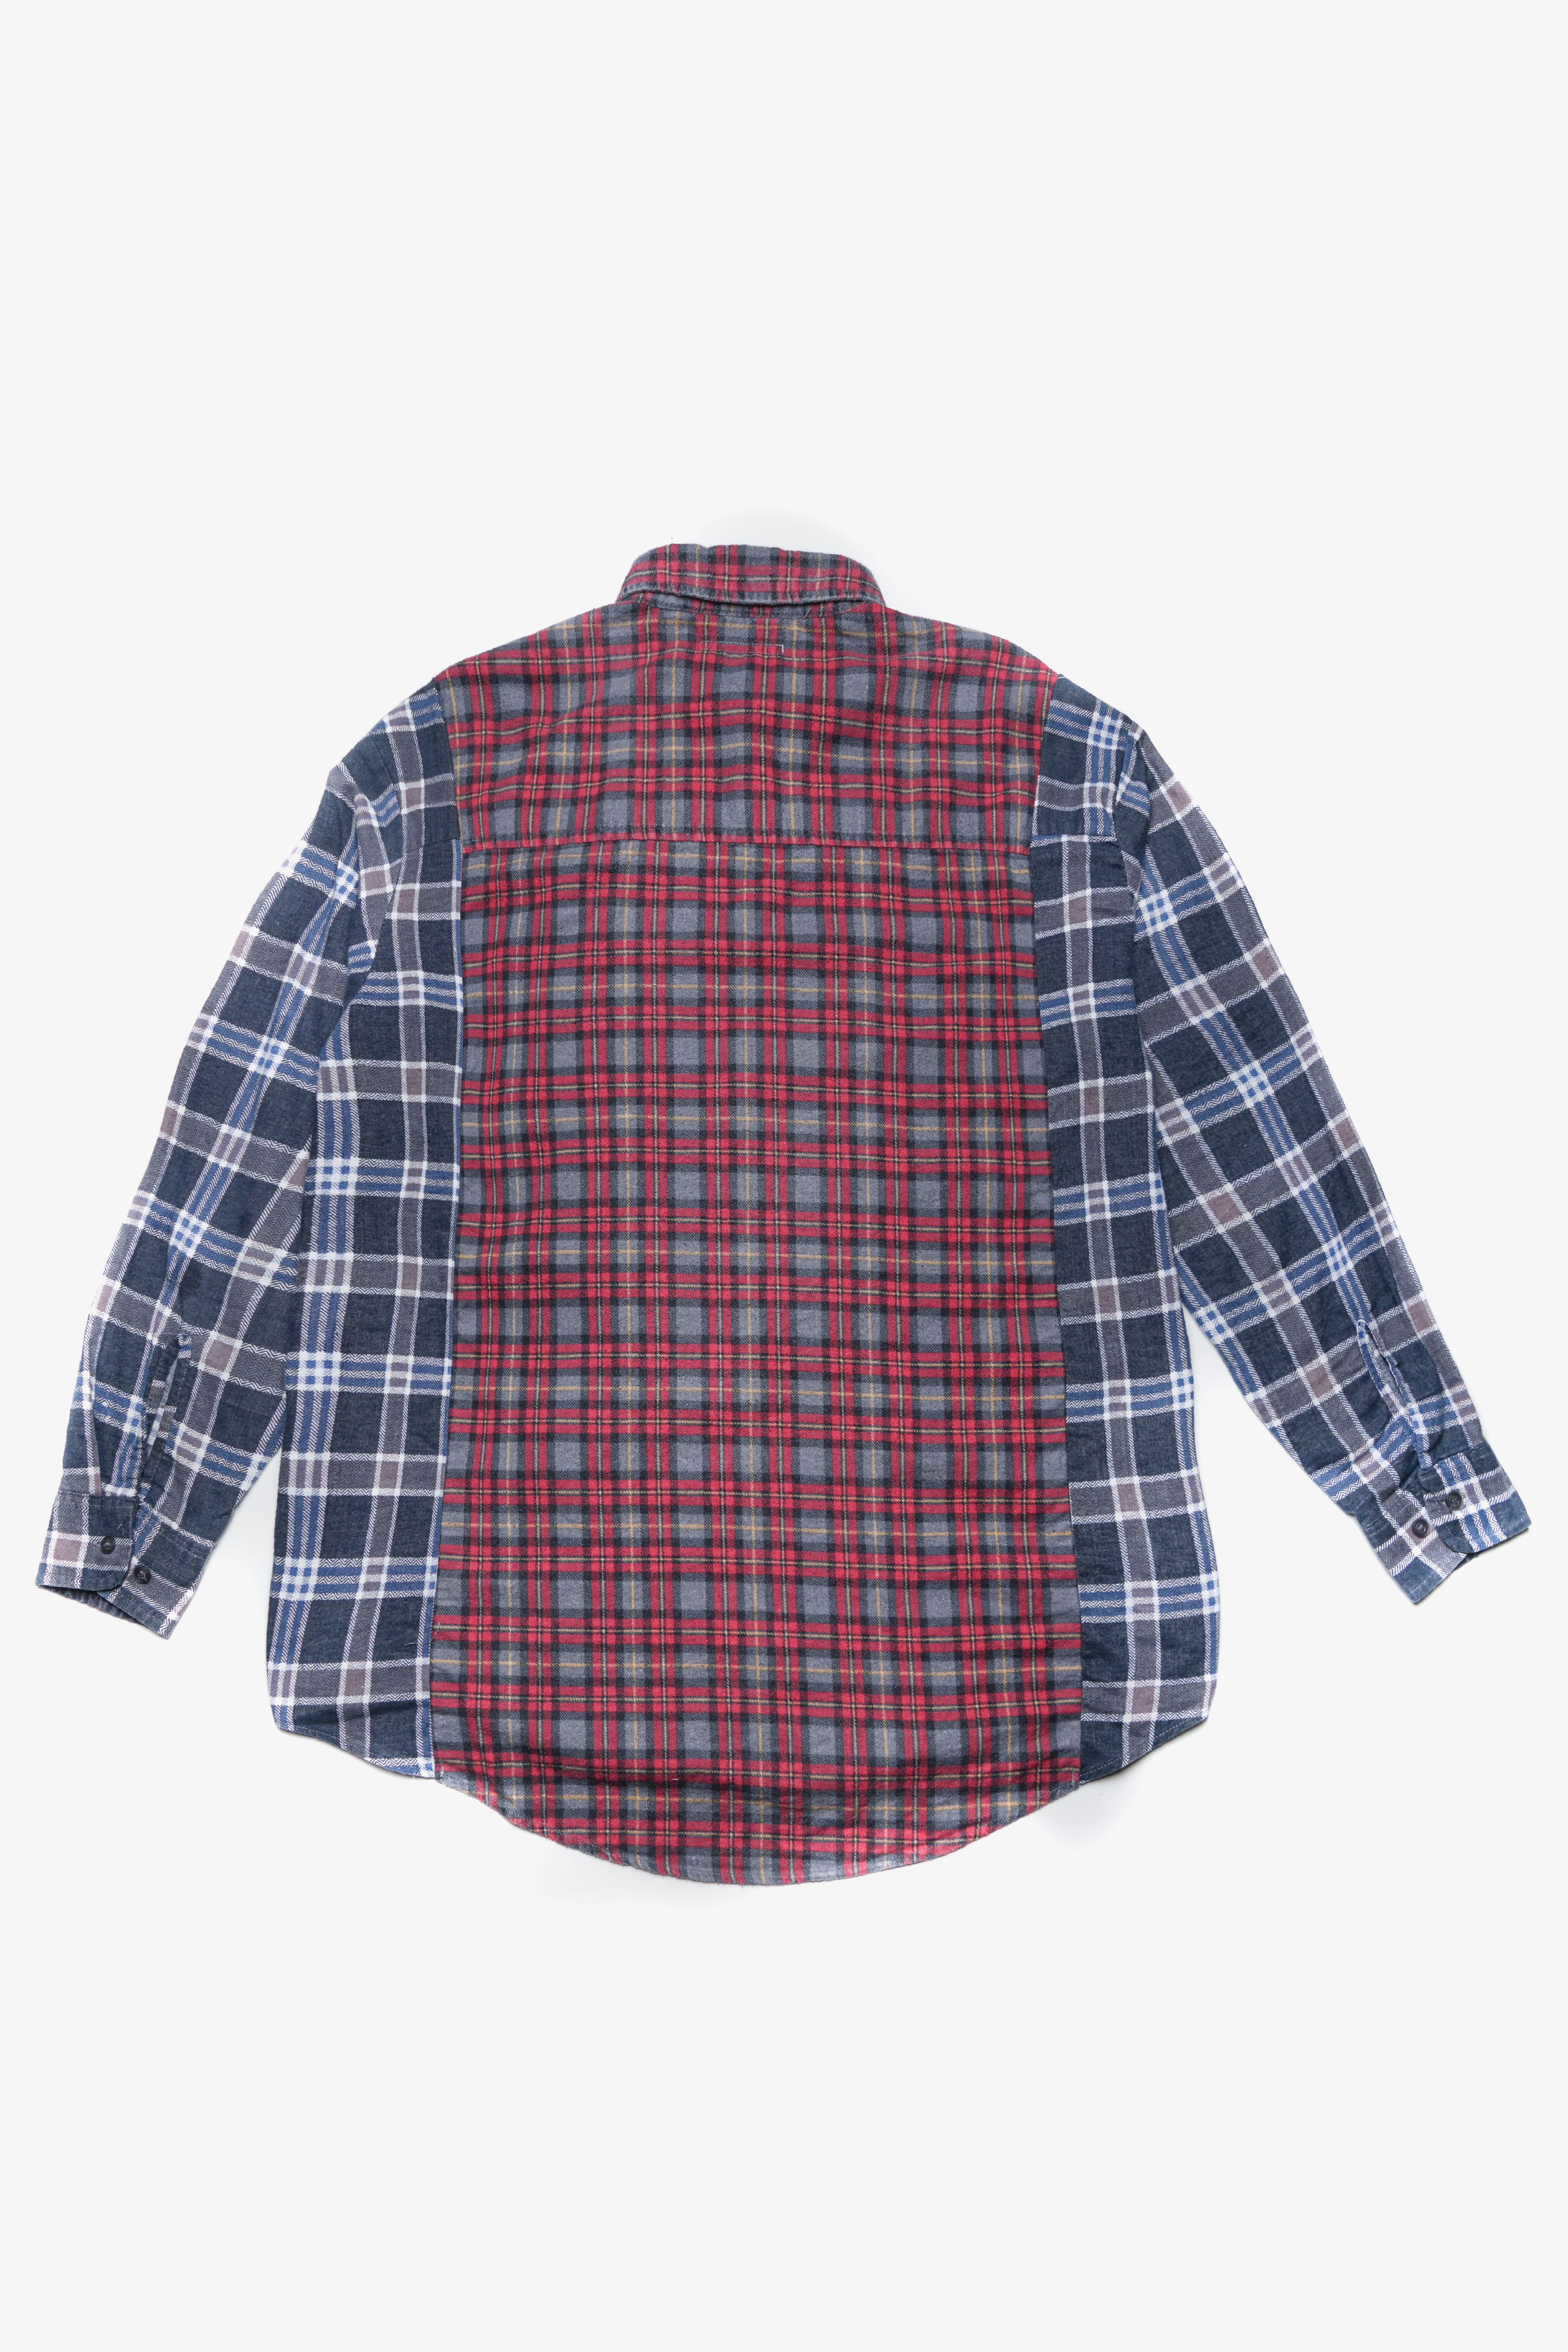 Selectshop FRAME - NEEDLES 7 Cuts Wide Flannel Shirt Shirts Dubai